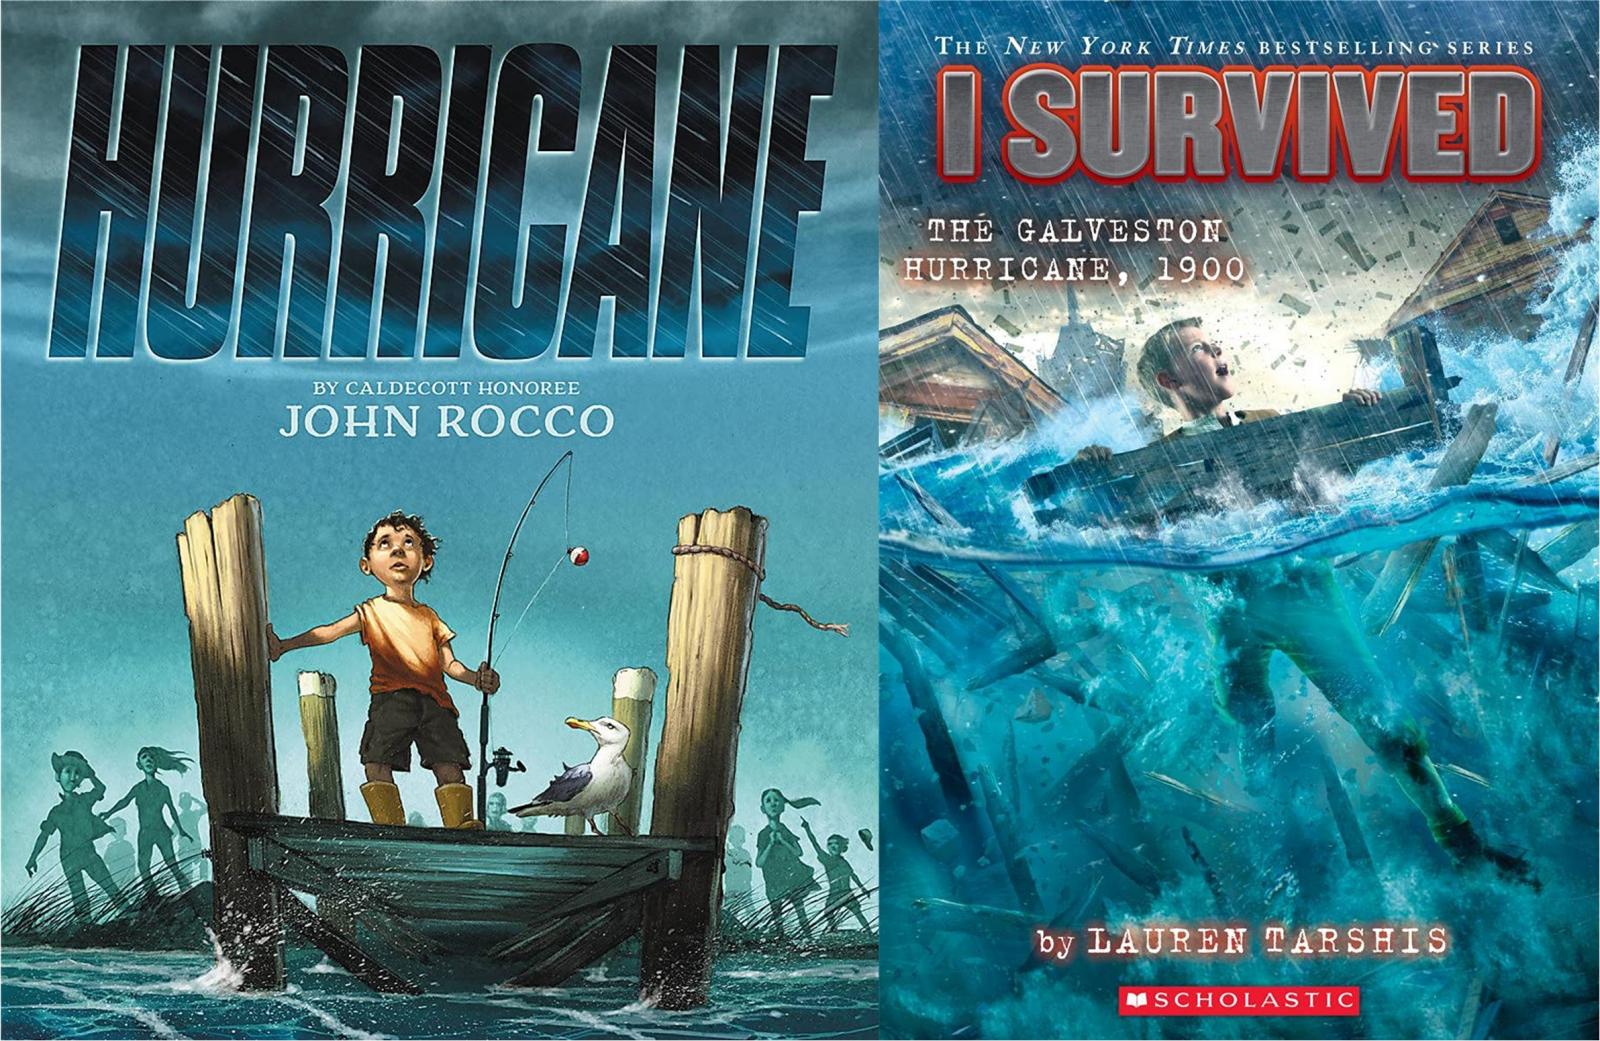 Hurricane by John Rocco & I Survived the Galveston Hurricane, 1900 by Lauren Tarshis